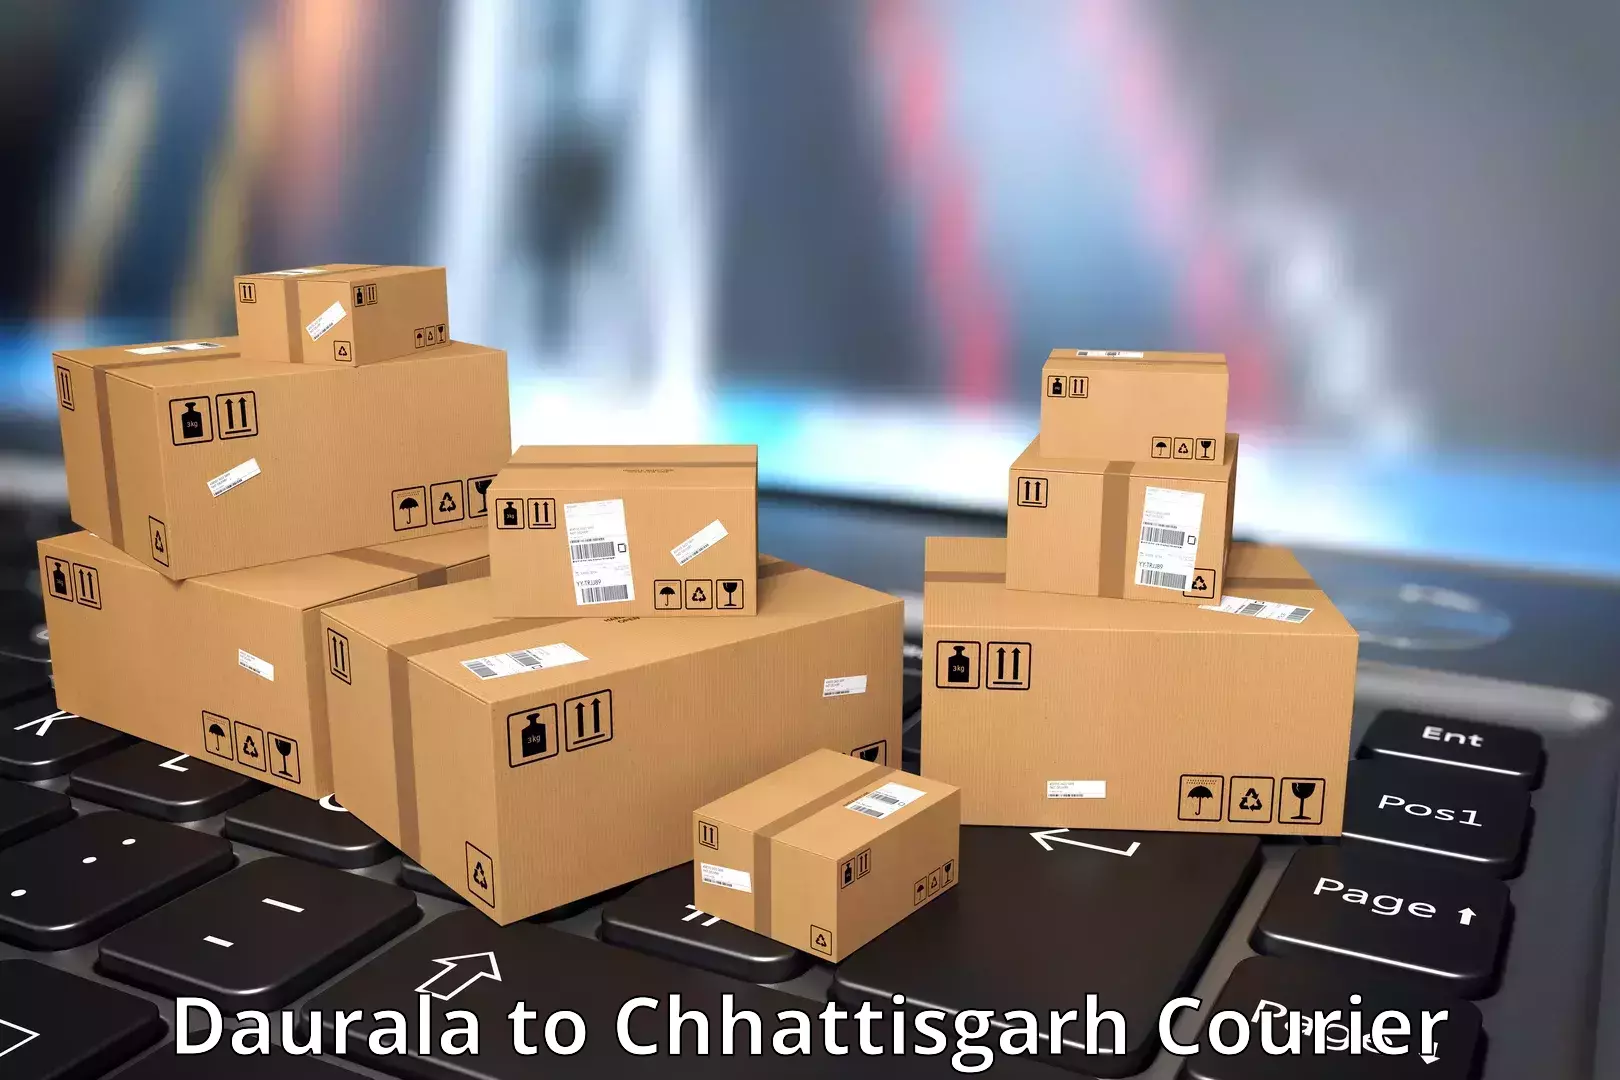 Package delivery network Daurala to Berla